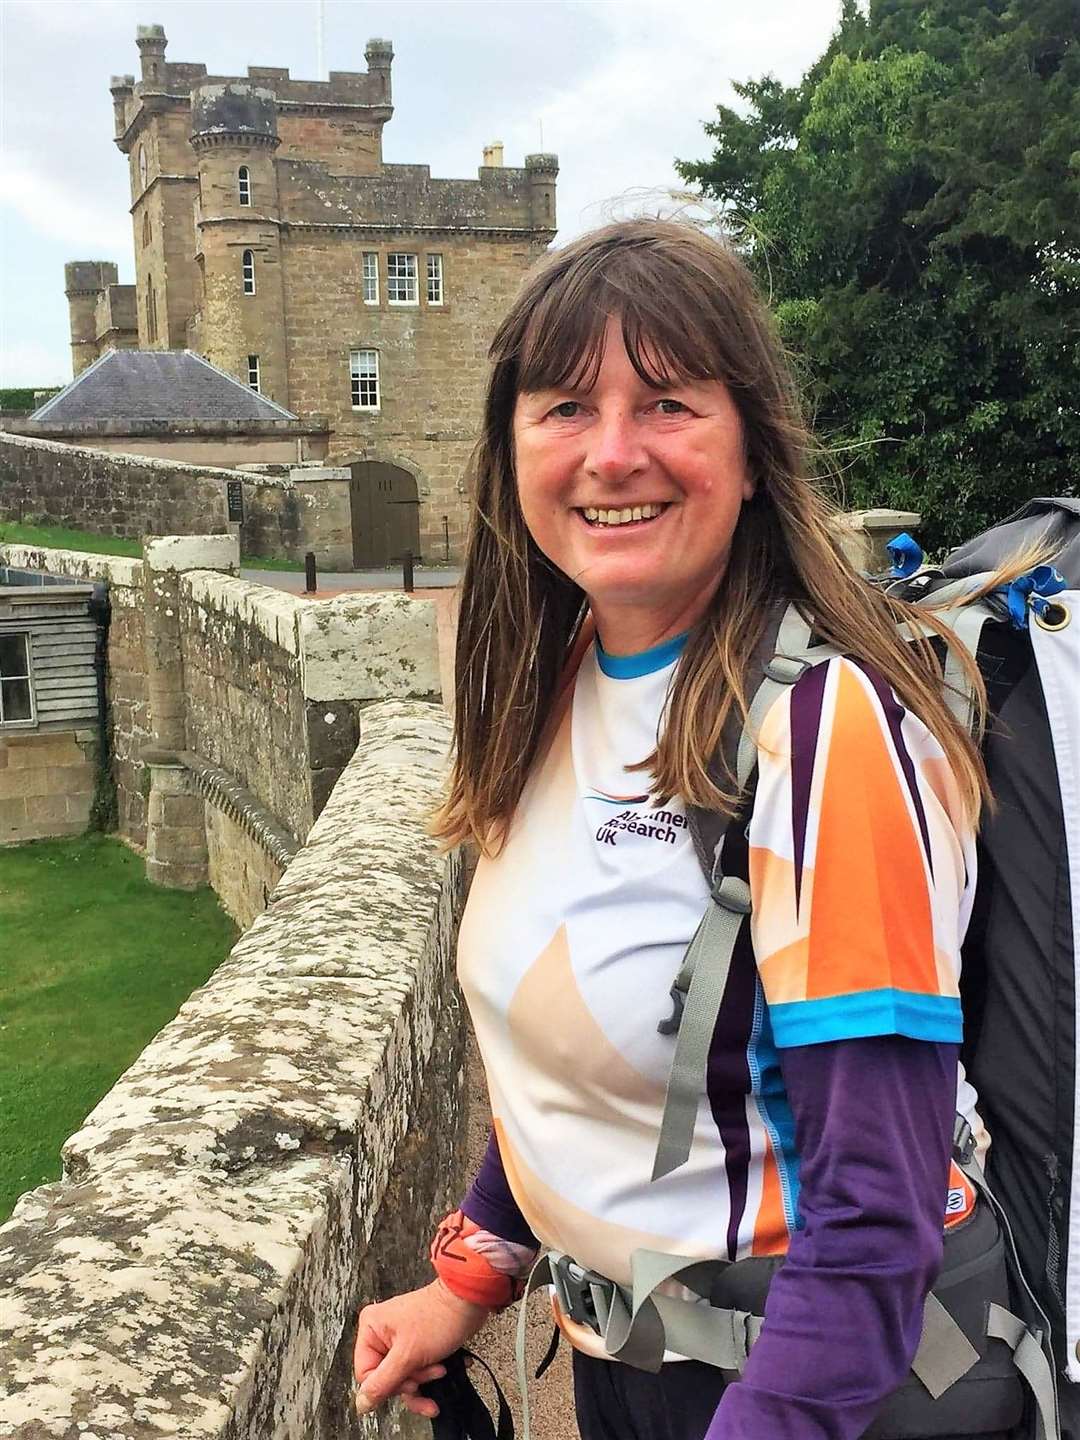 Karen Penny is due to restart her long-distance charity walk around Britain.